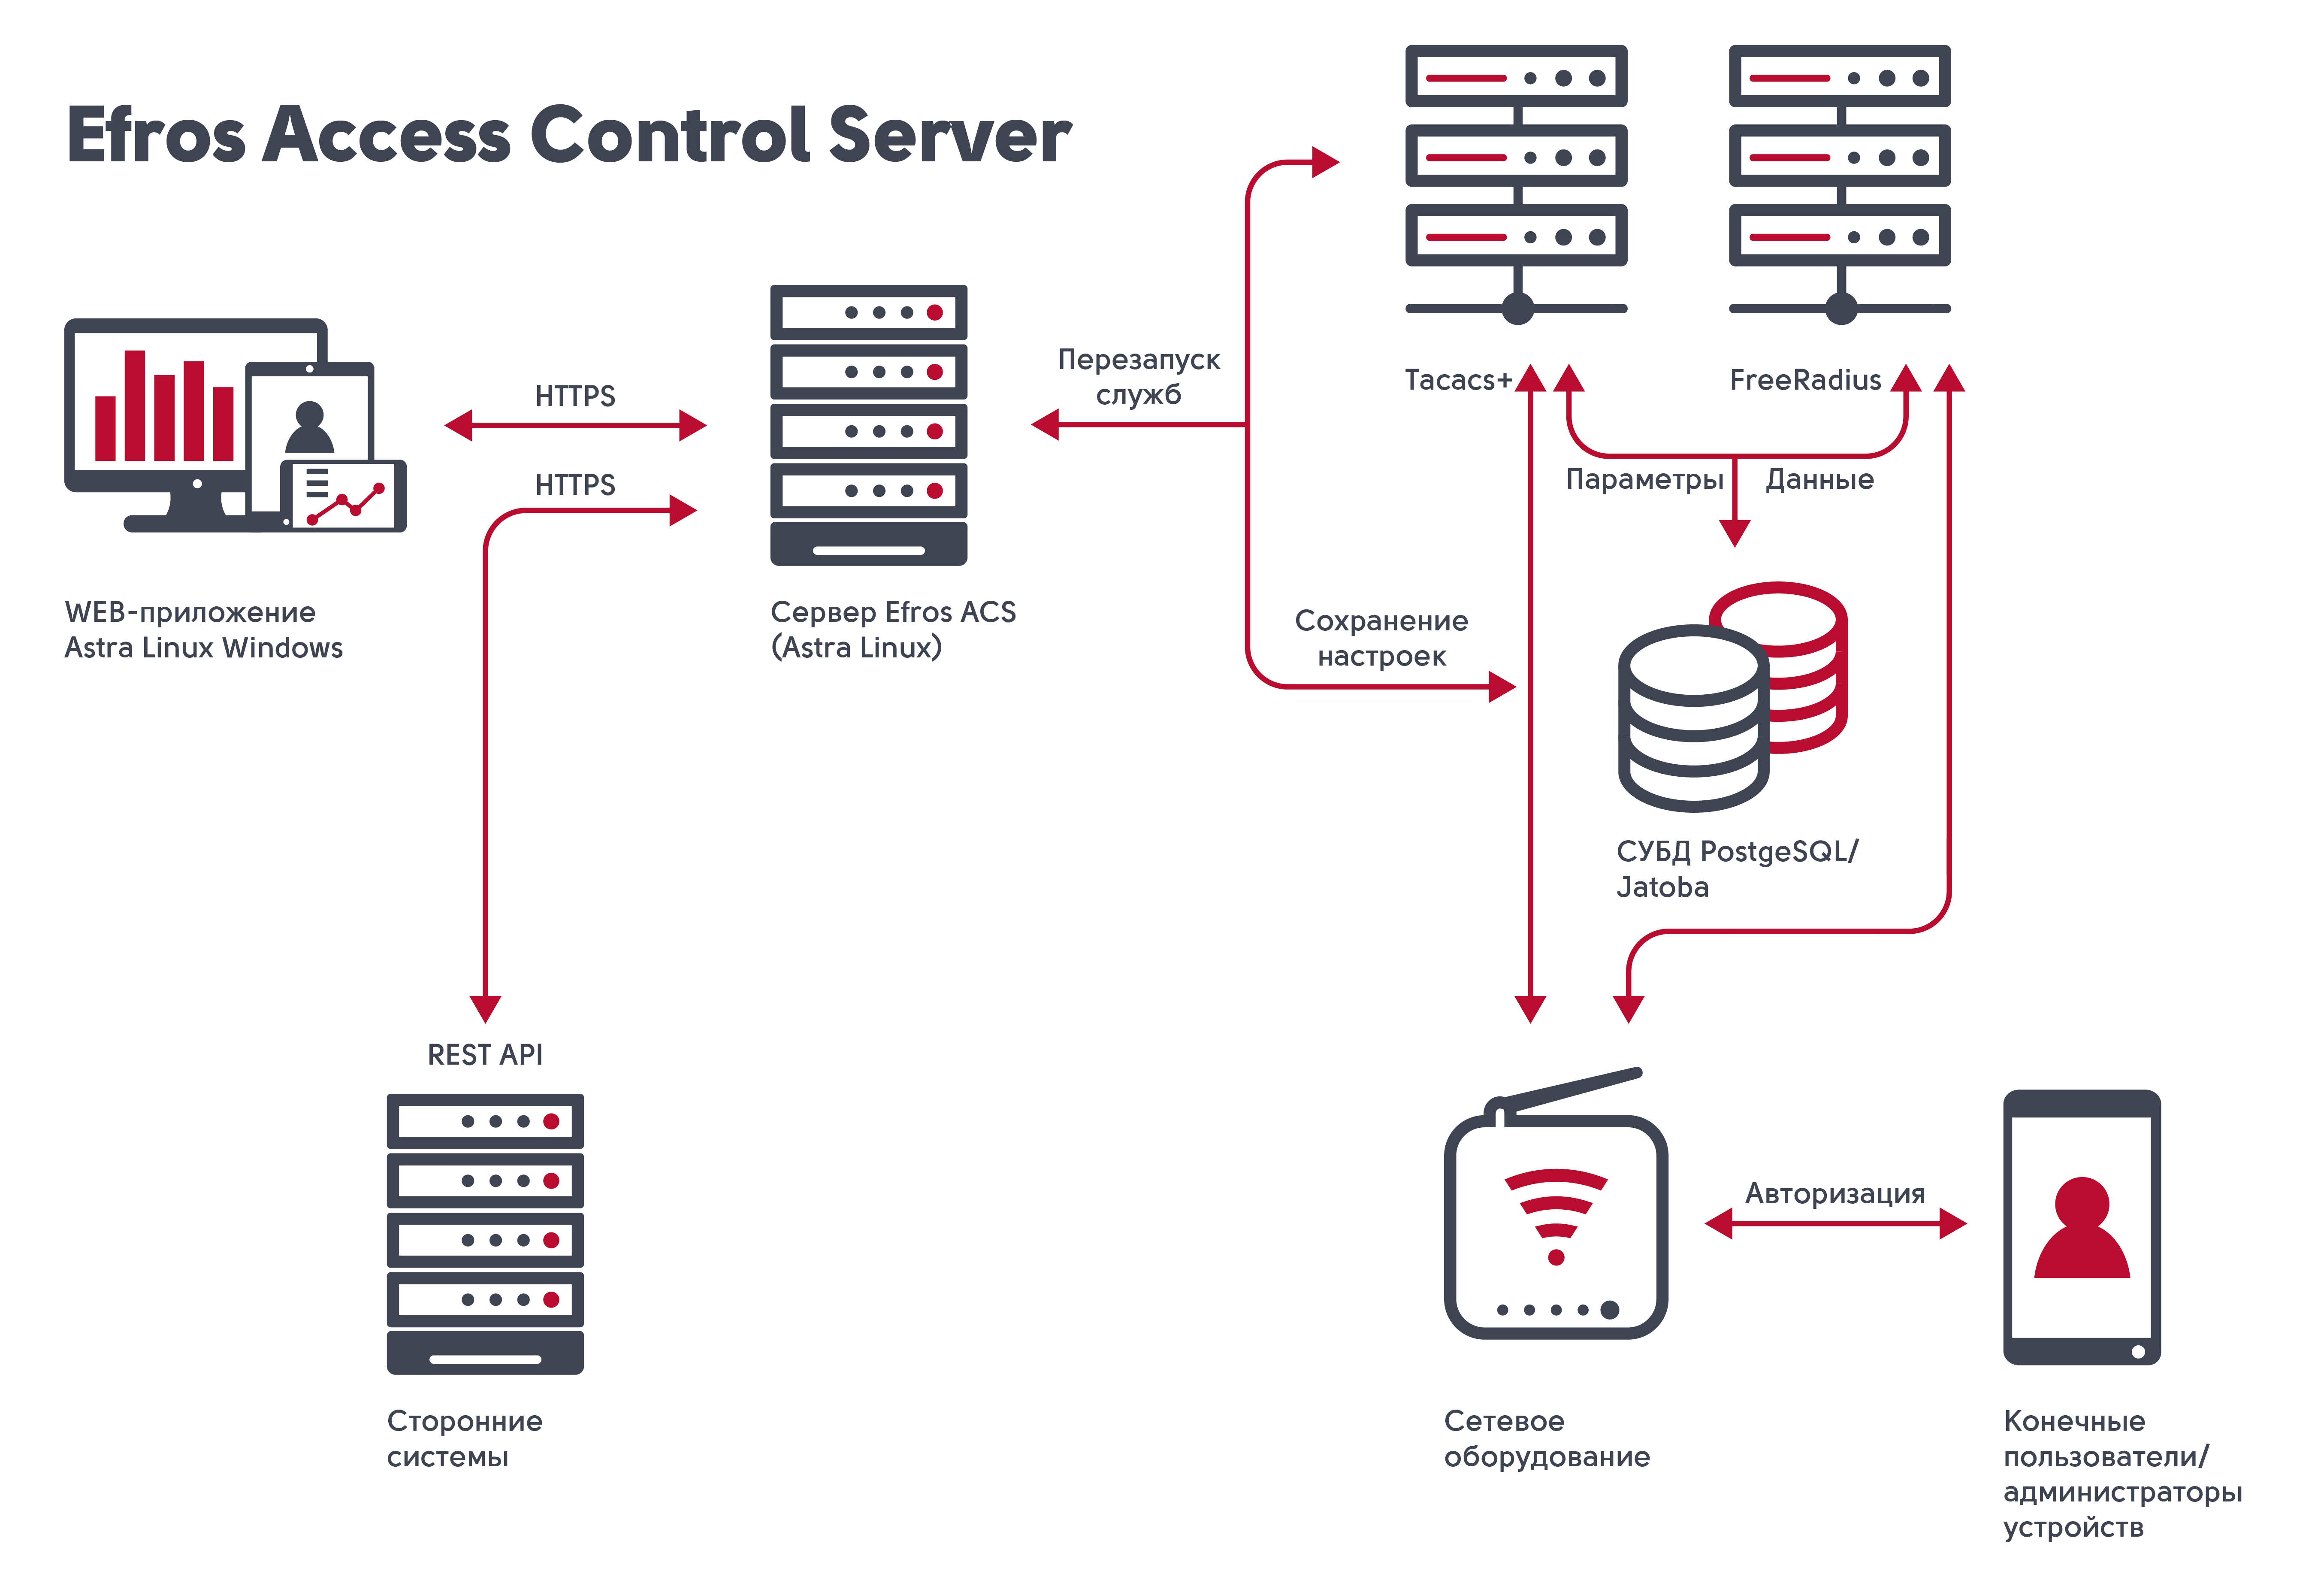 Efros Access Control Server